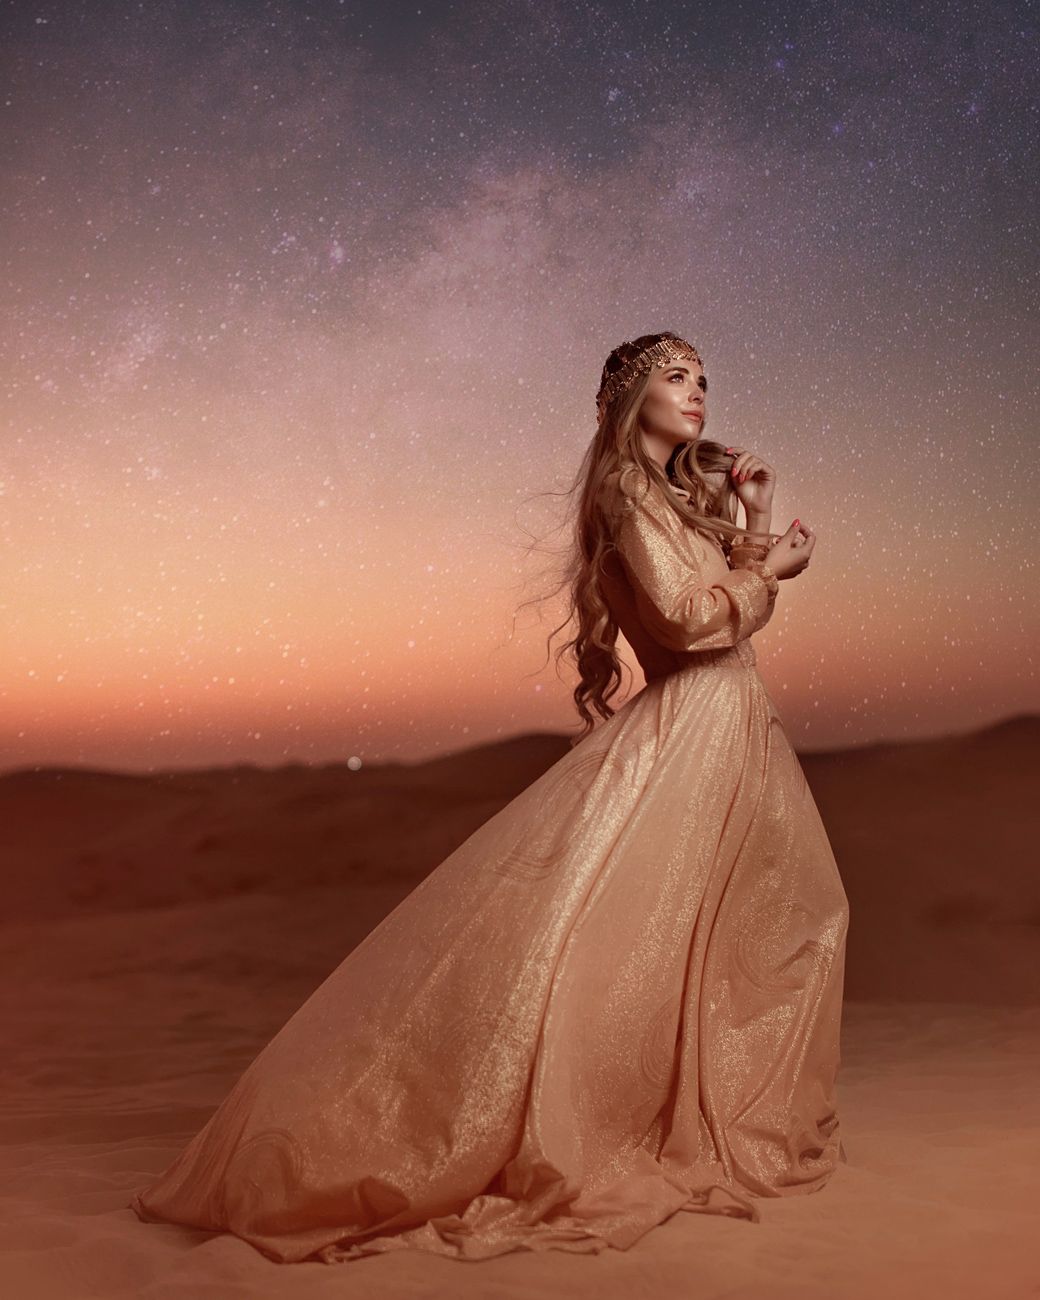 Beautiful Lady Dubai. Professional Photo-Shoot in UAE. Boutique Top-Quality Photography in United Arab Emirates | Kuckoo.Art